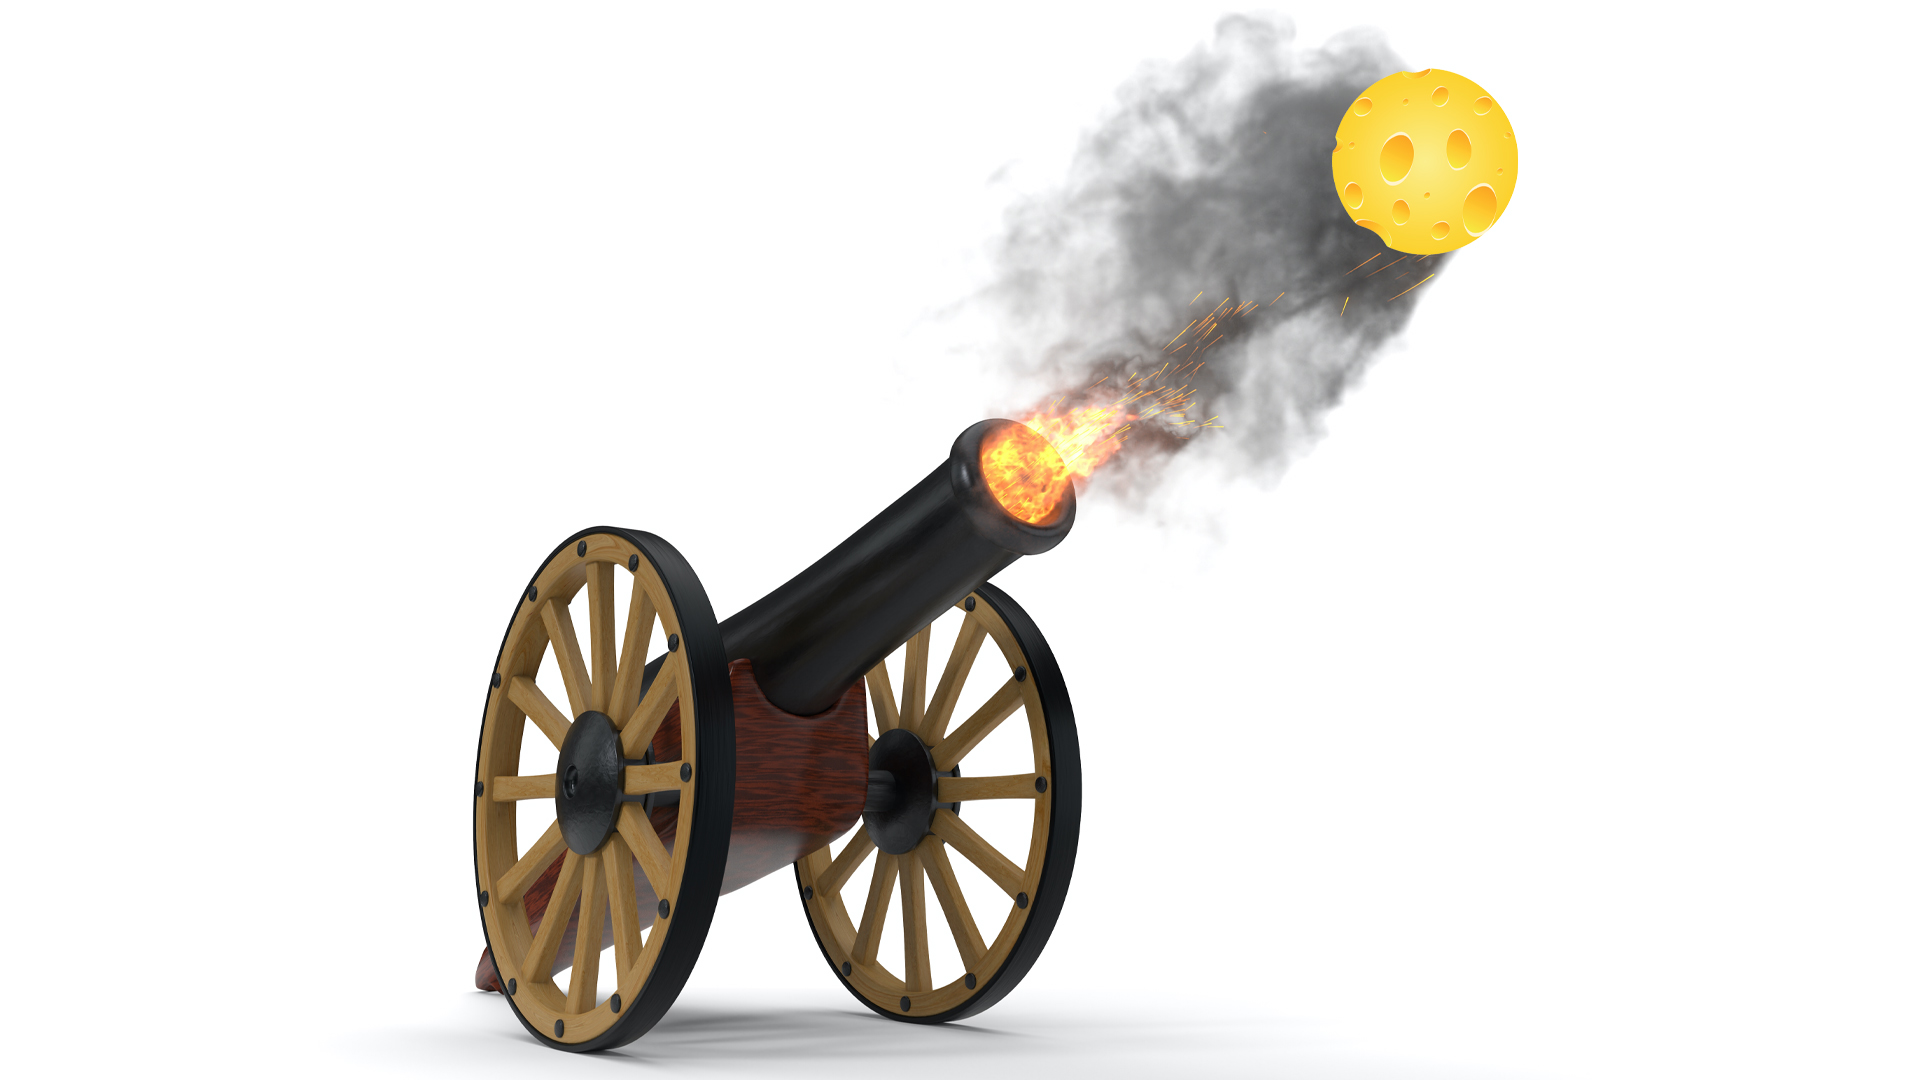 A cannon firing a ball of cheese